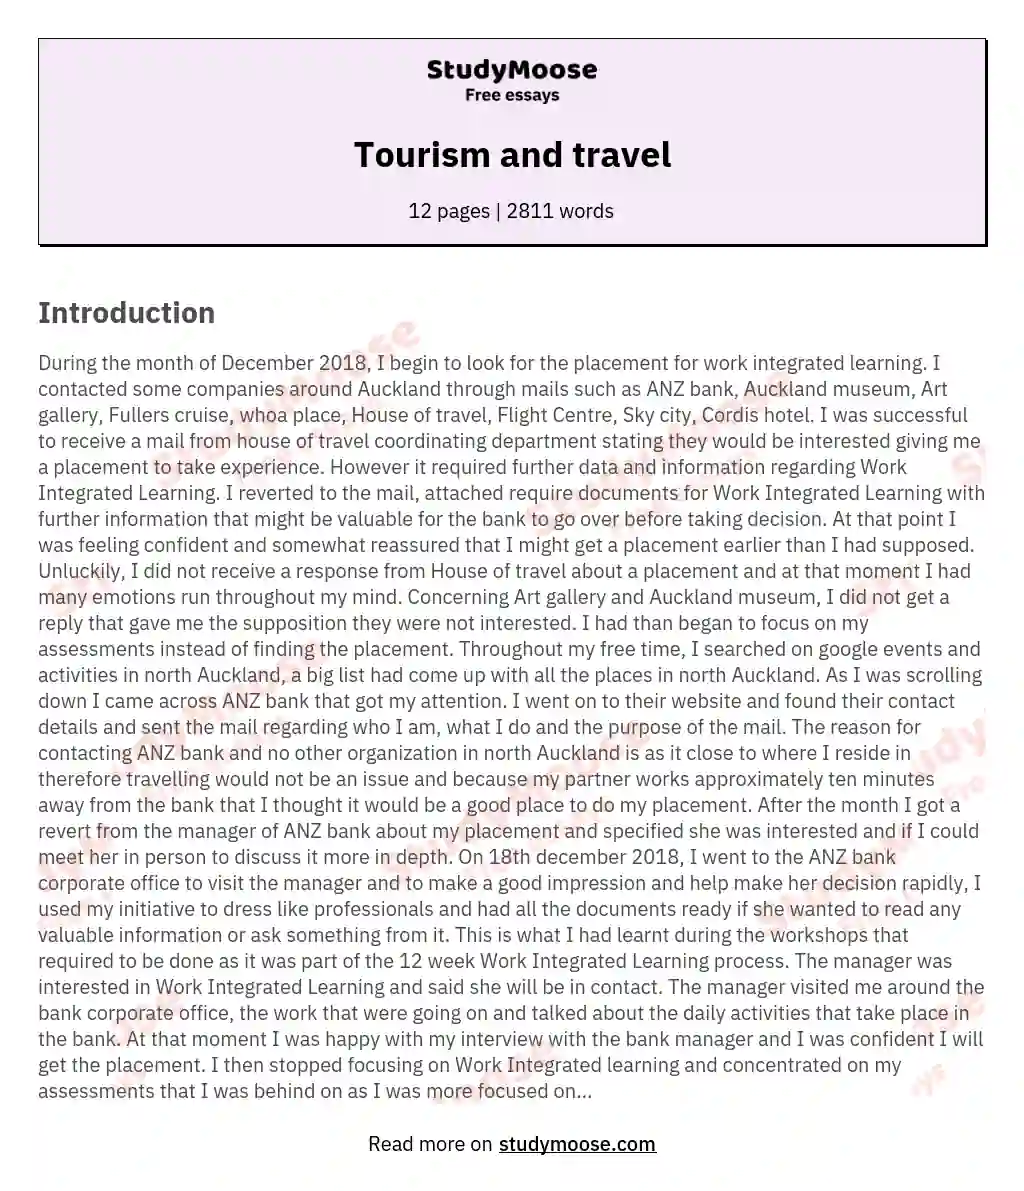 Tourism and travel essay